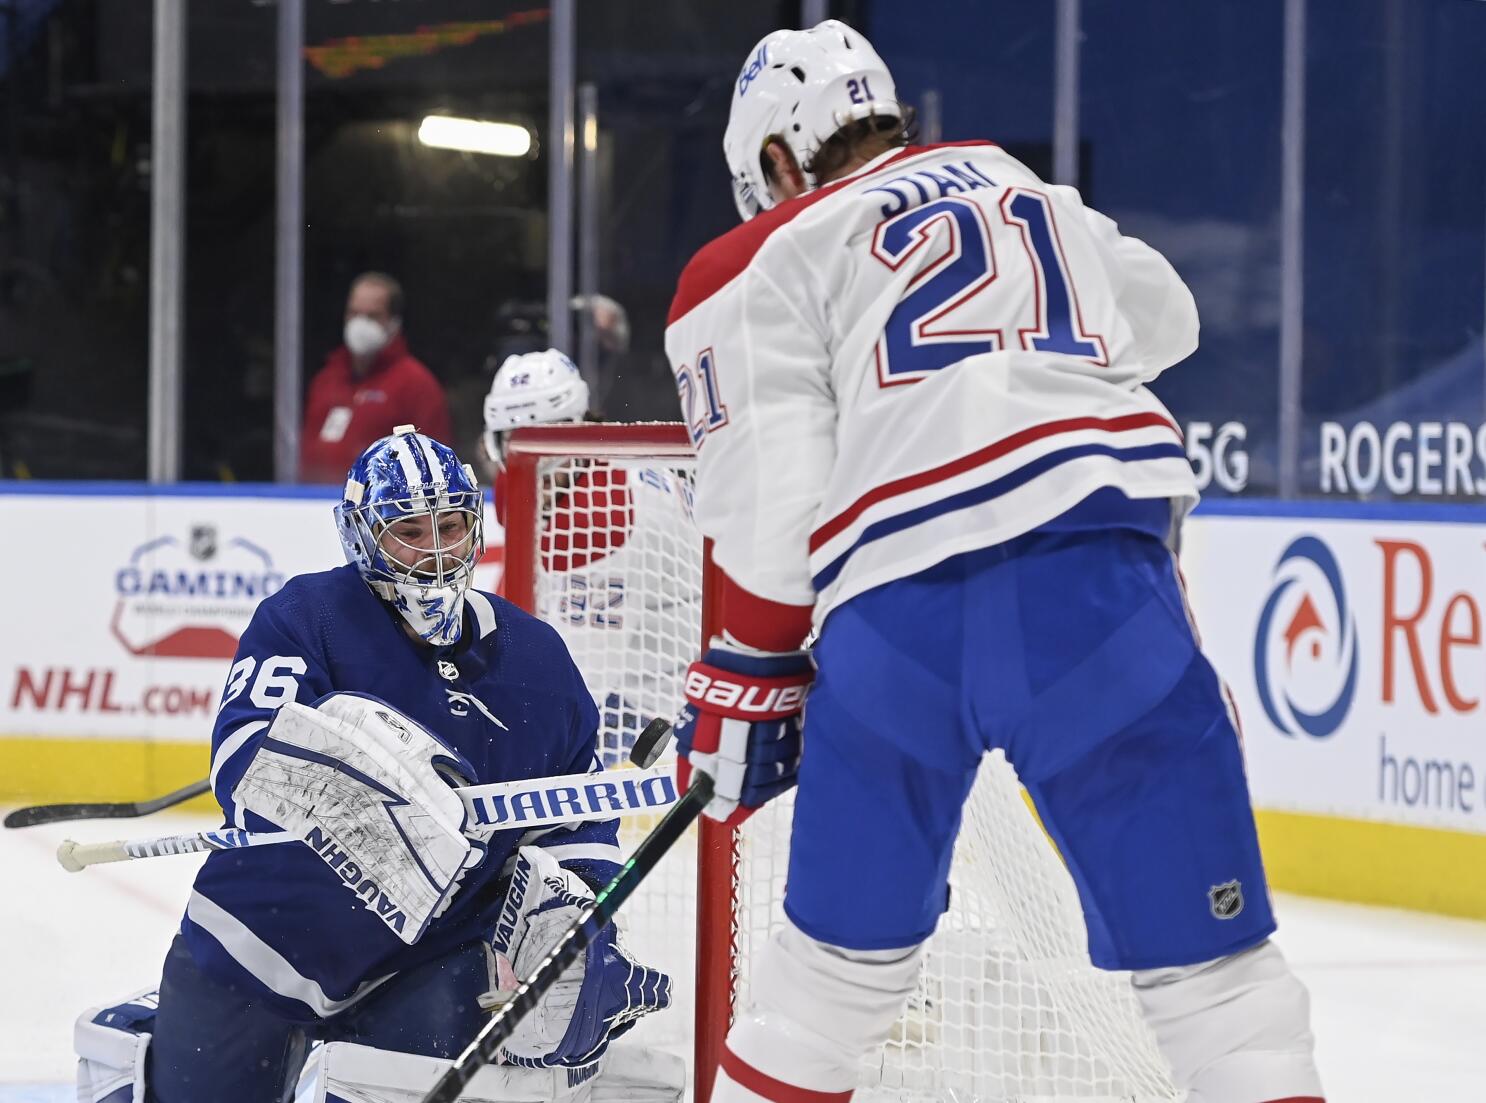 Matthews' 2nd straight hat trick propels Maple Leafs past Wild